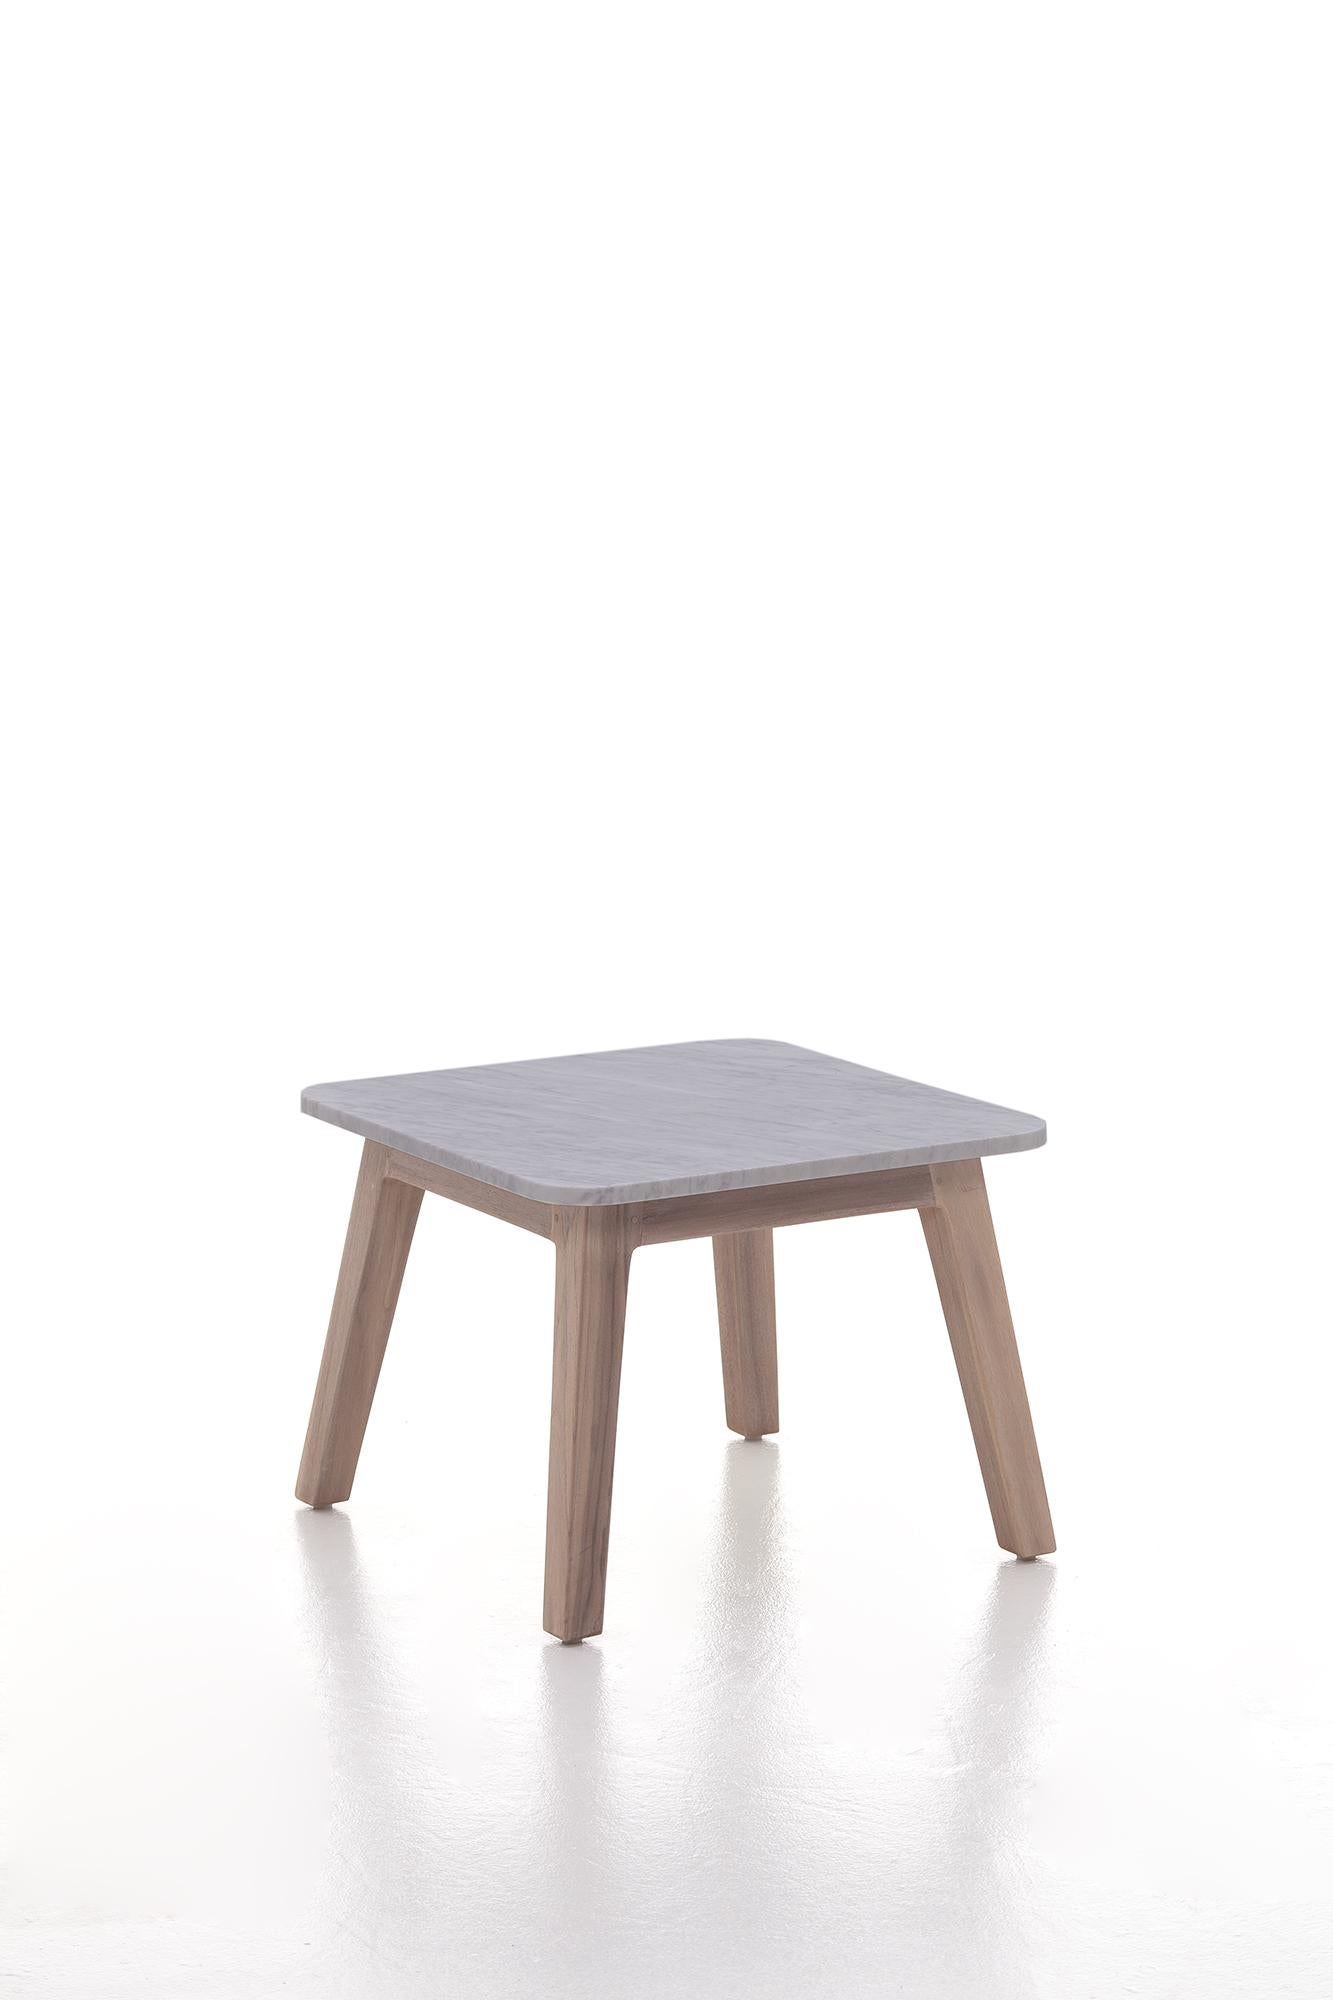 Italian Gervasoni Inout 868 Coffee Table in White Carrara Marble Top & Washed Teak Frame For Sale